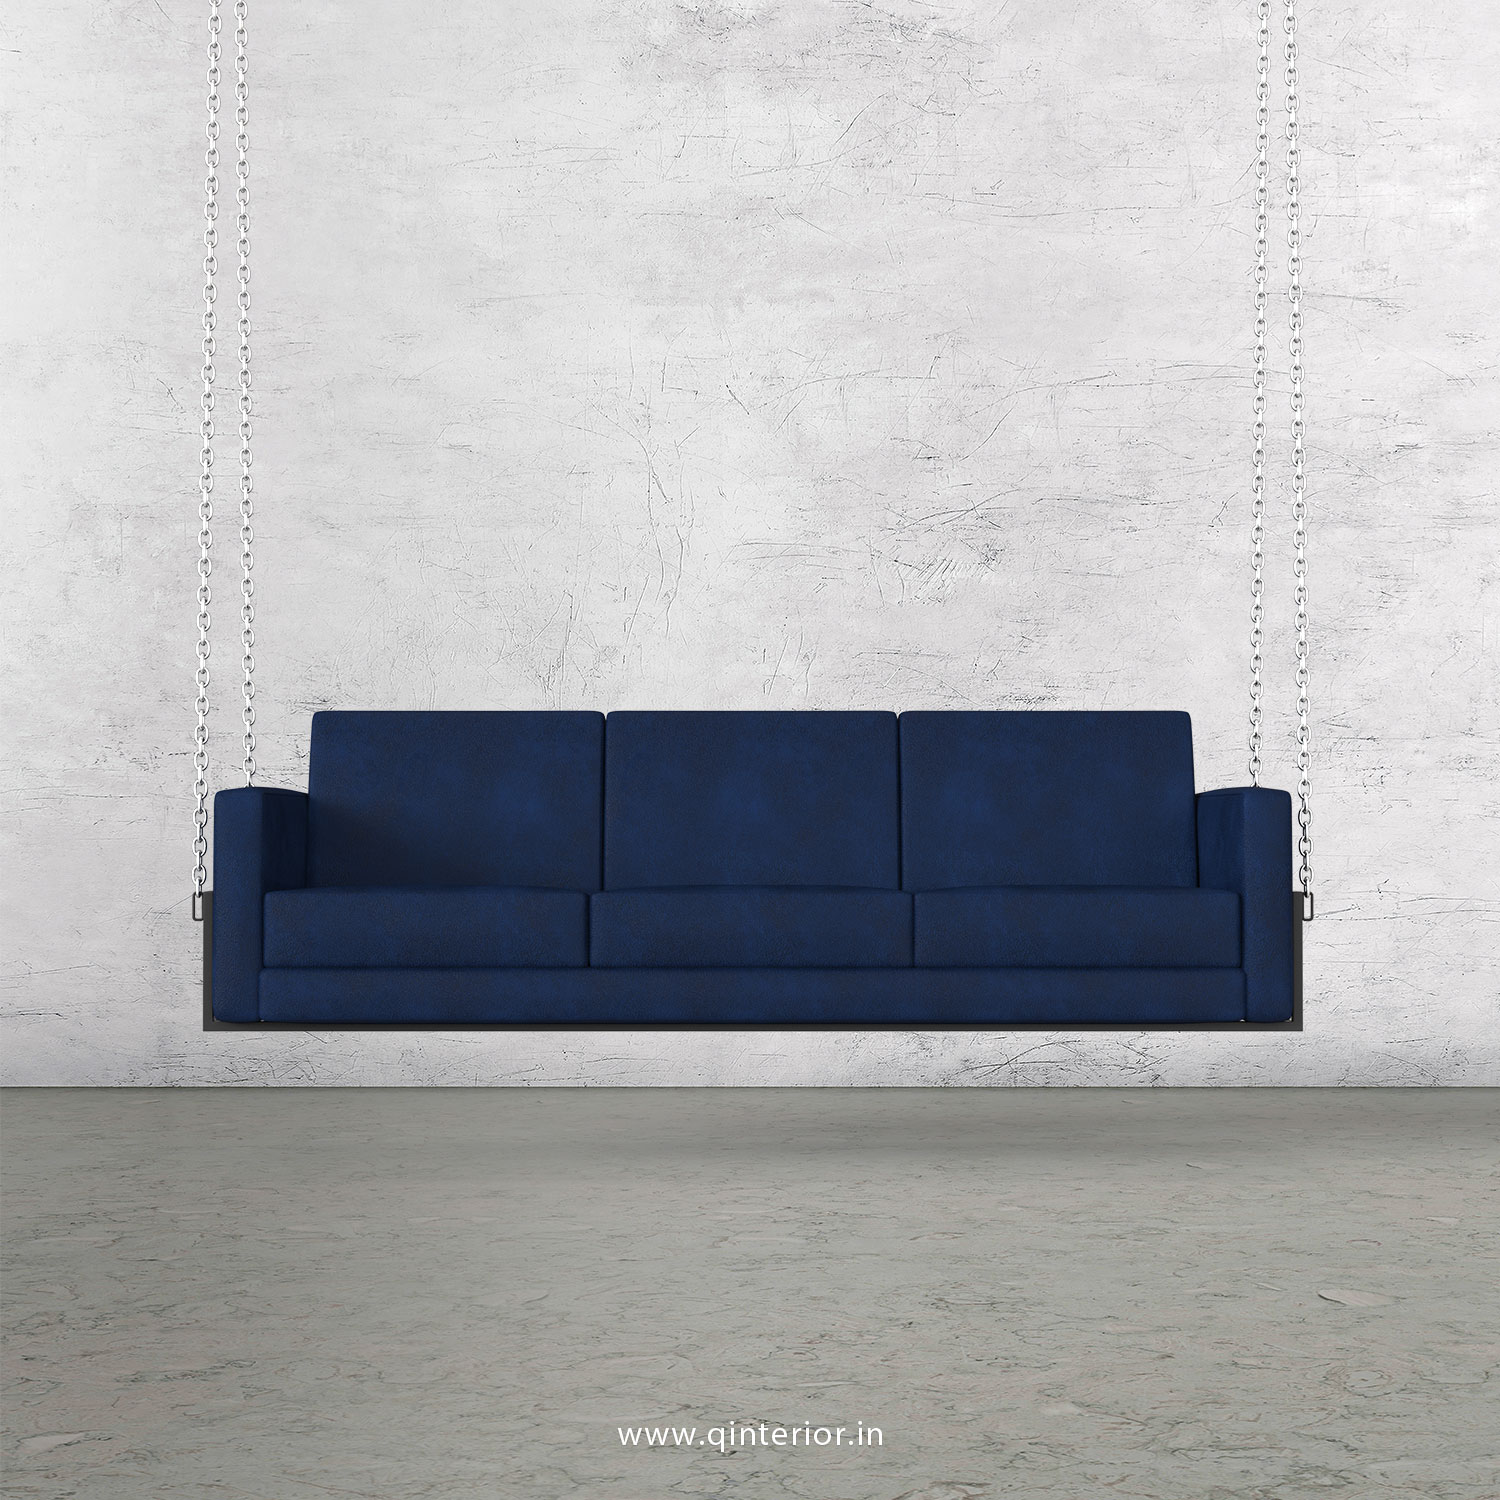 NIRVANA 3 Seater Swing Sofa in Fab Leather Fabric - SSF001 FL05